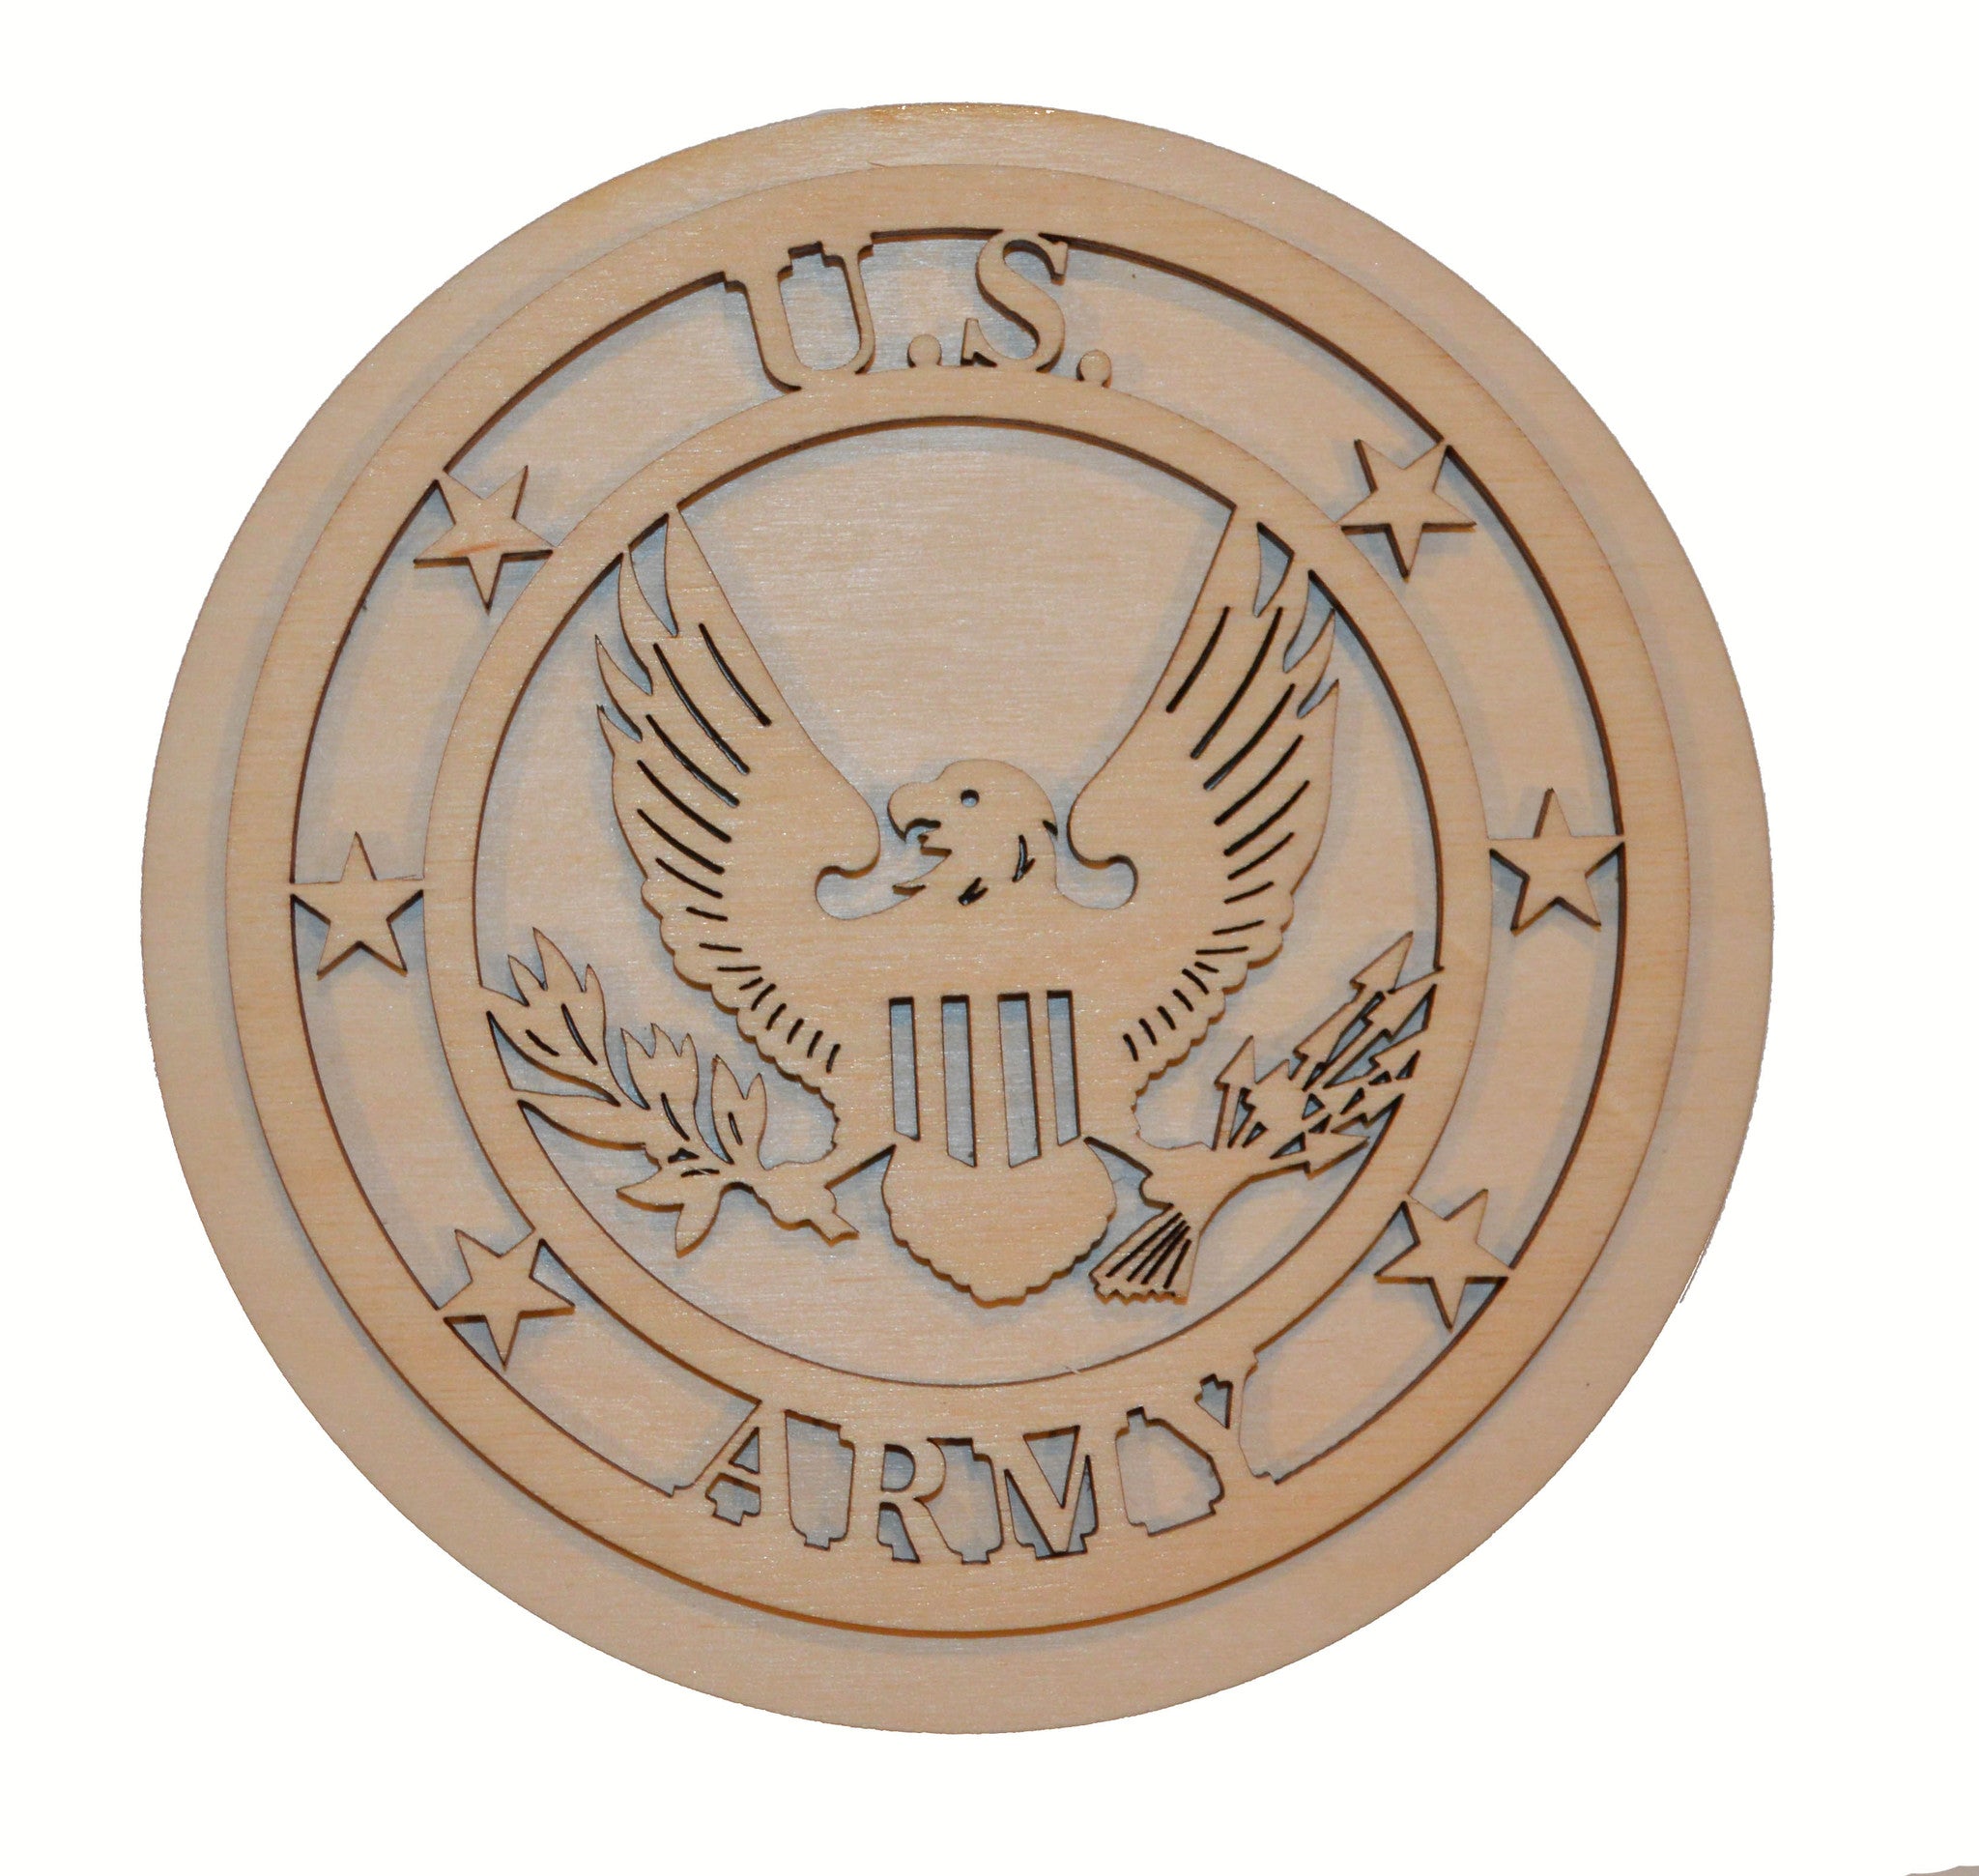 U.S. Army Badge